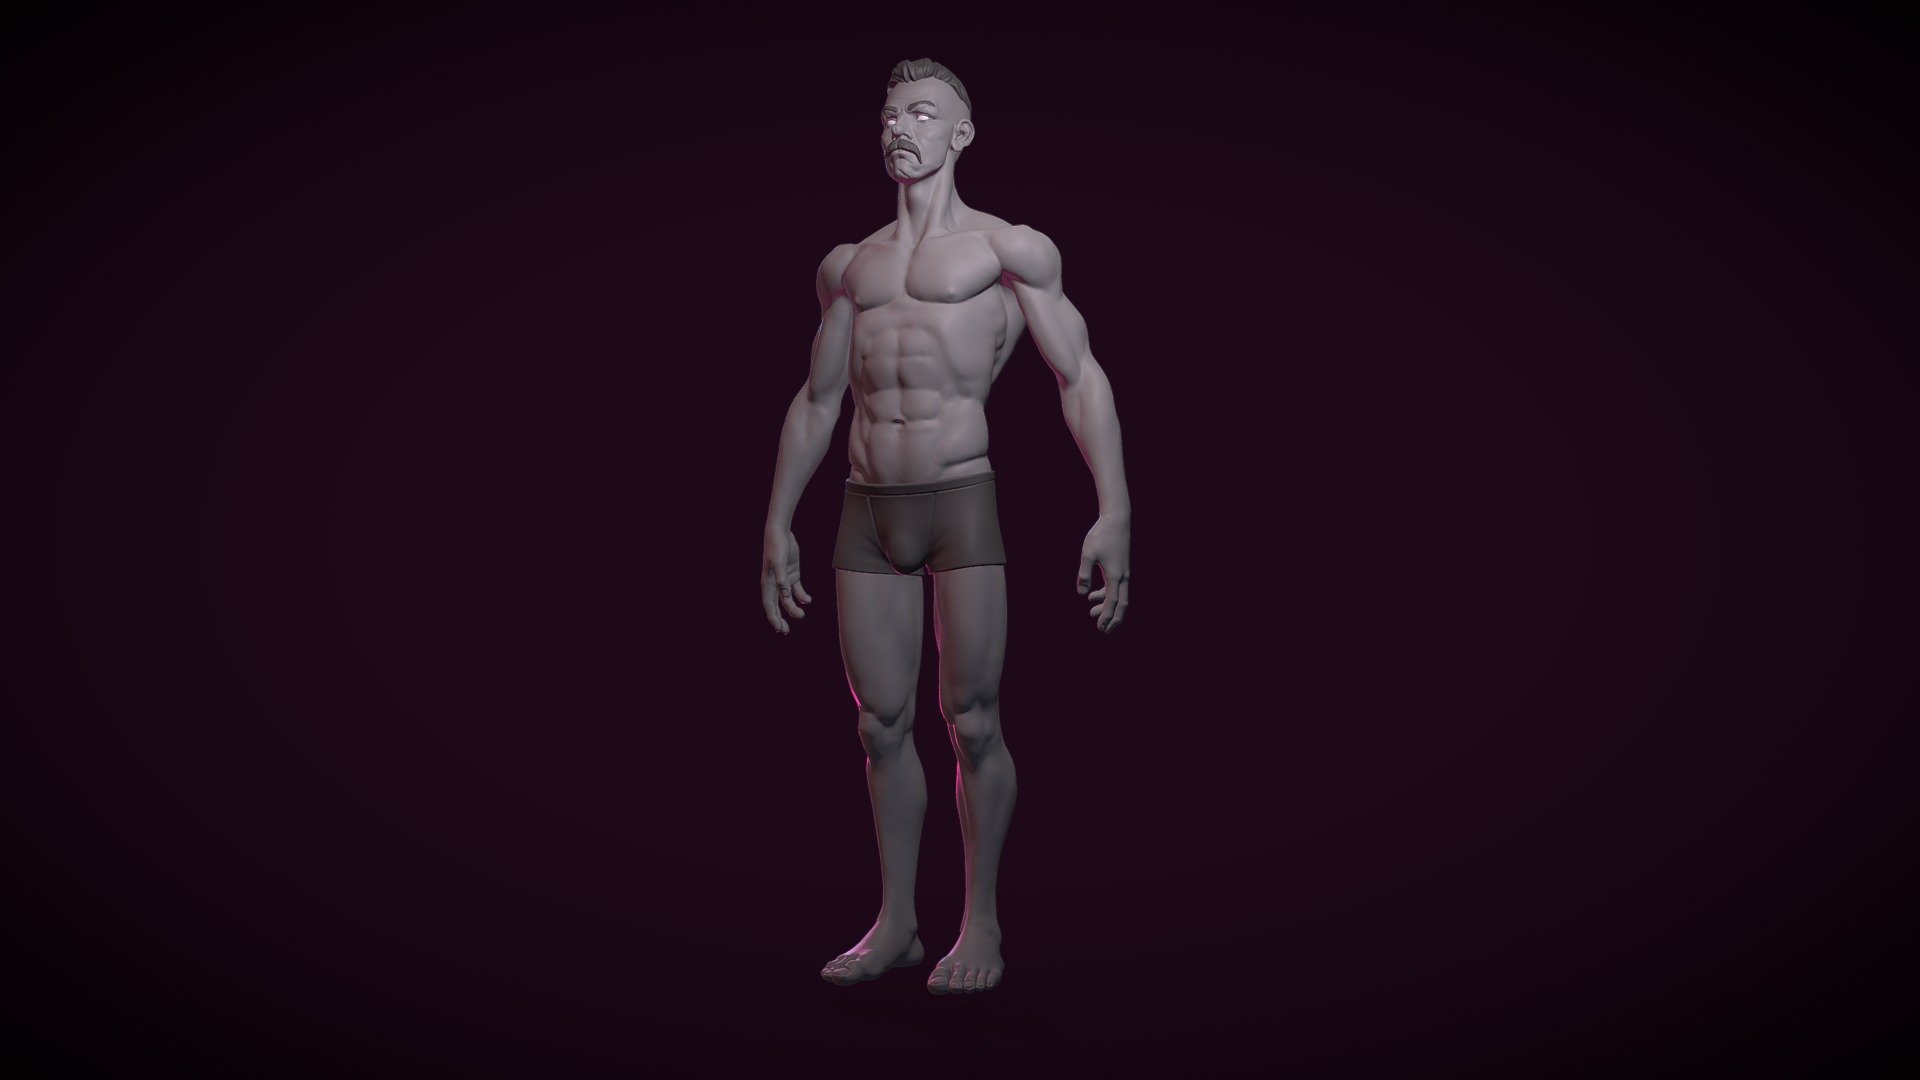 Stylized anatomy sculpt practice - 3D model by gkirill22 [22c25b7